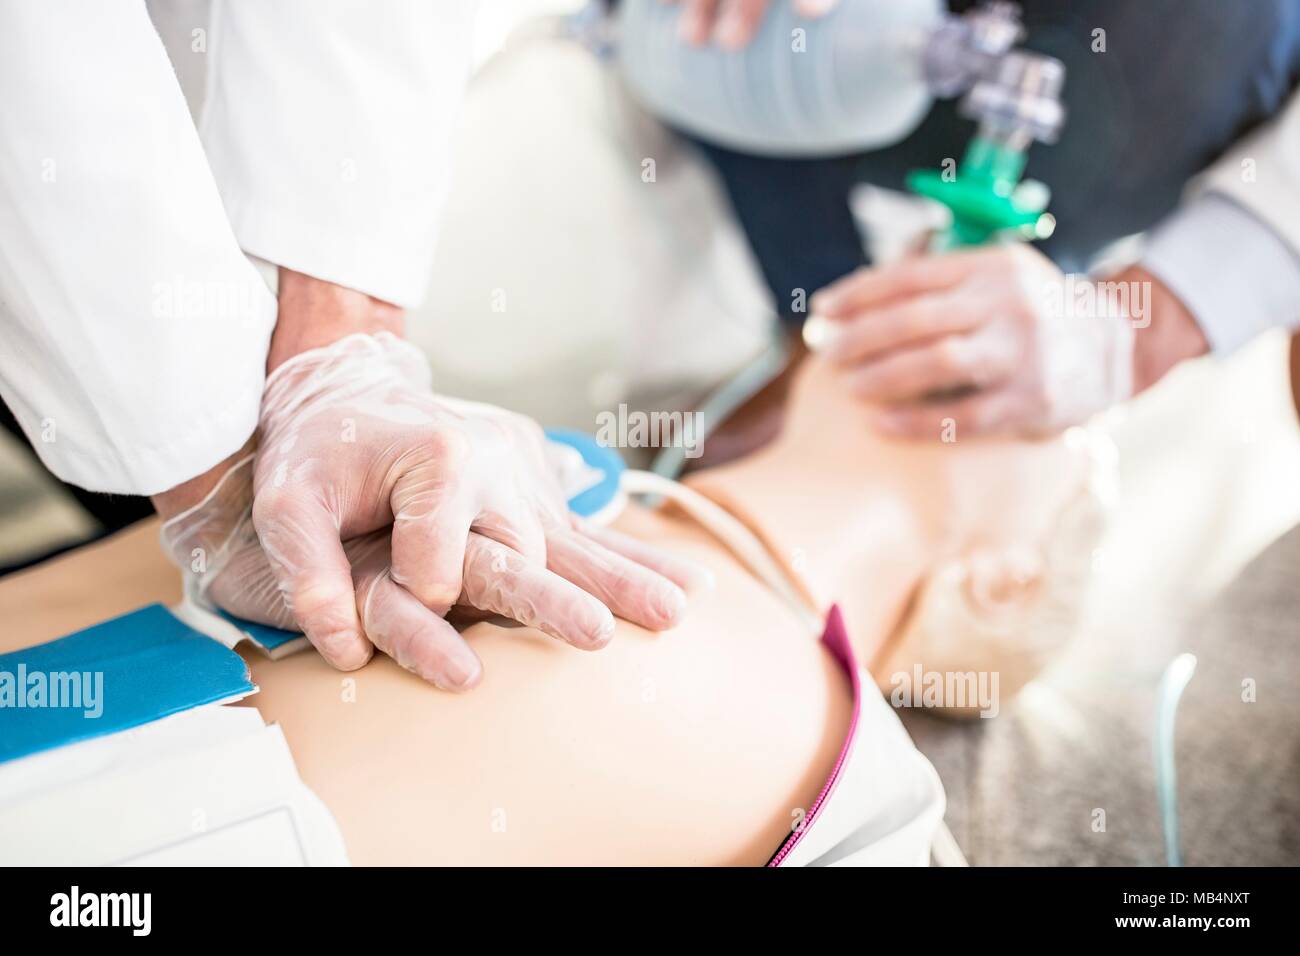 Doctors undertaking CPR training Stock Photo